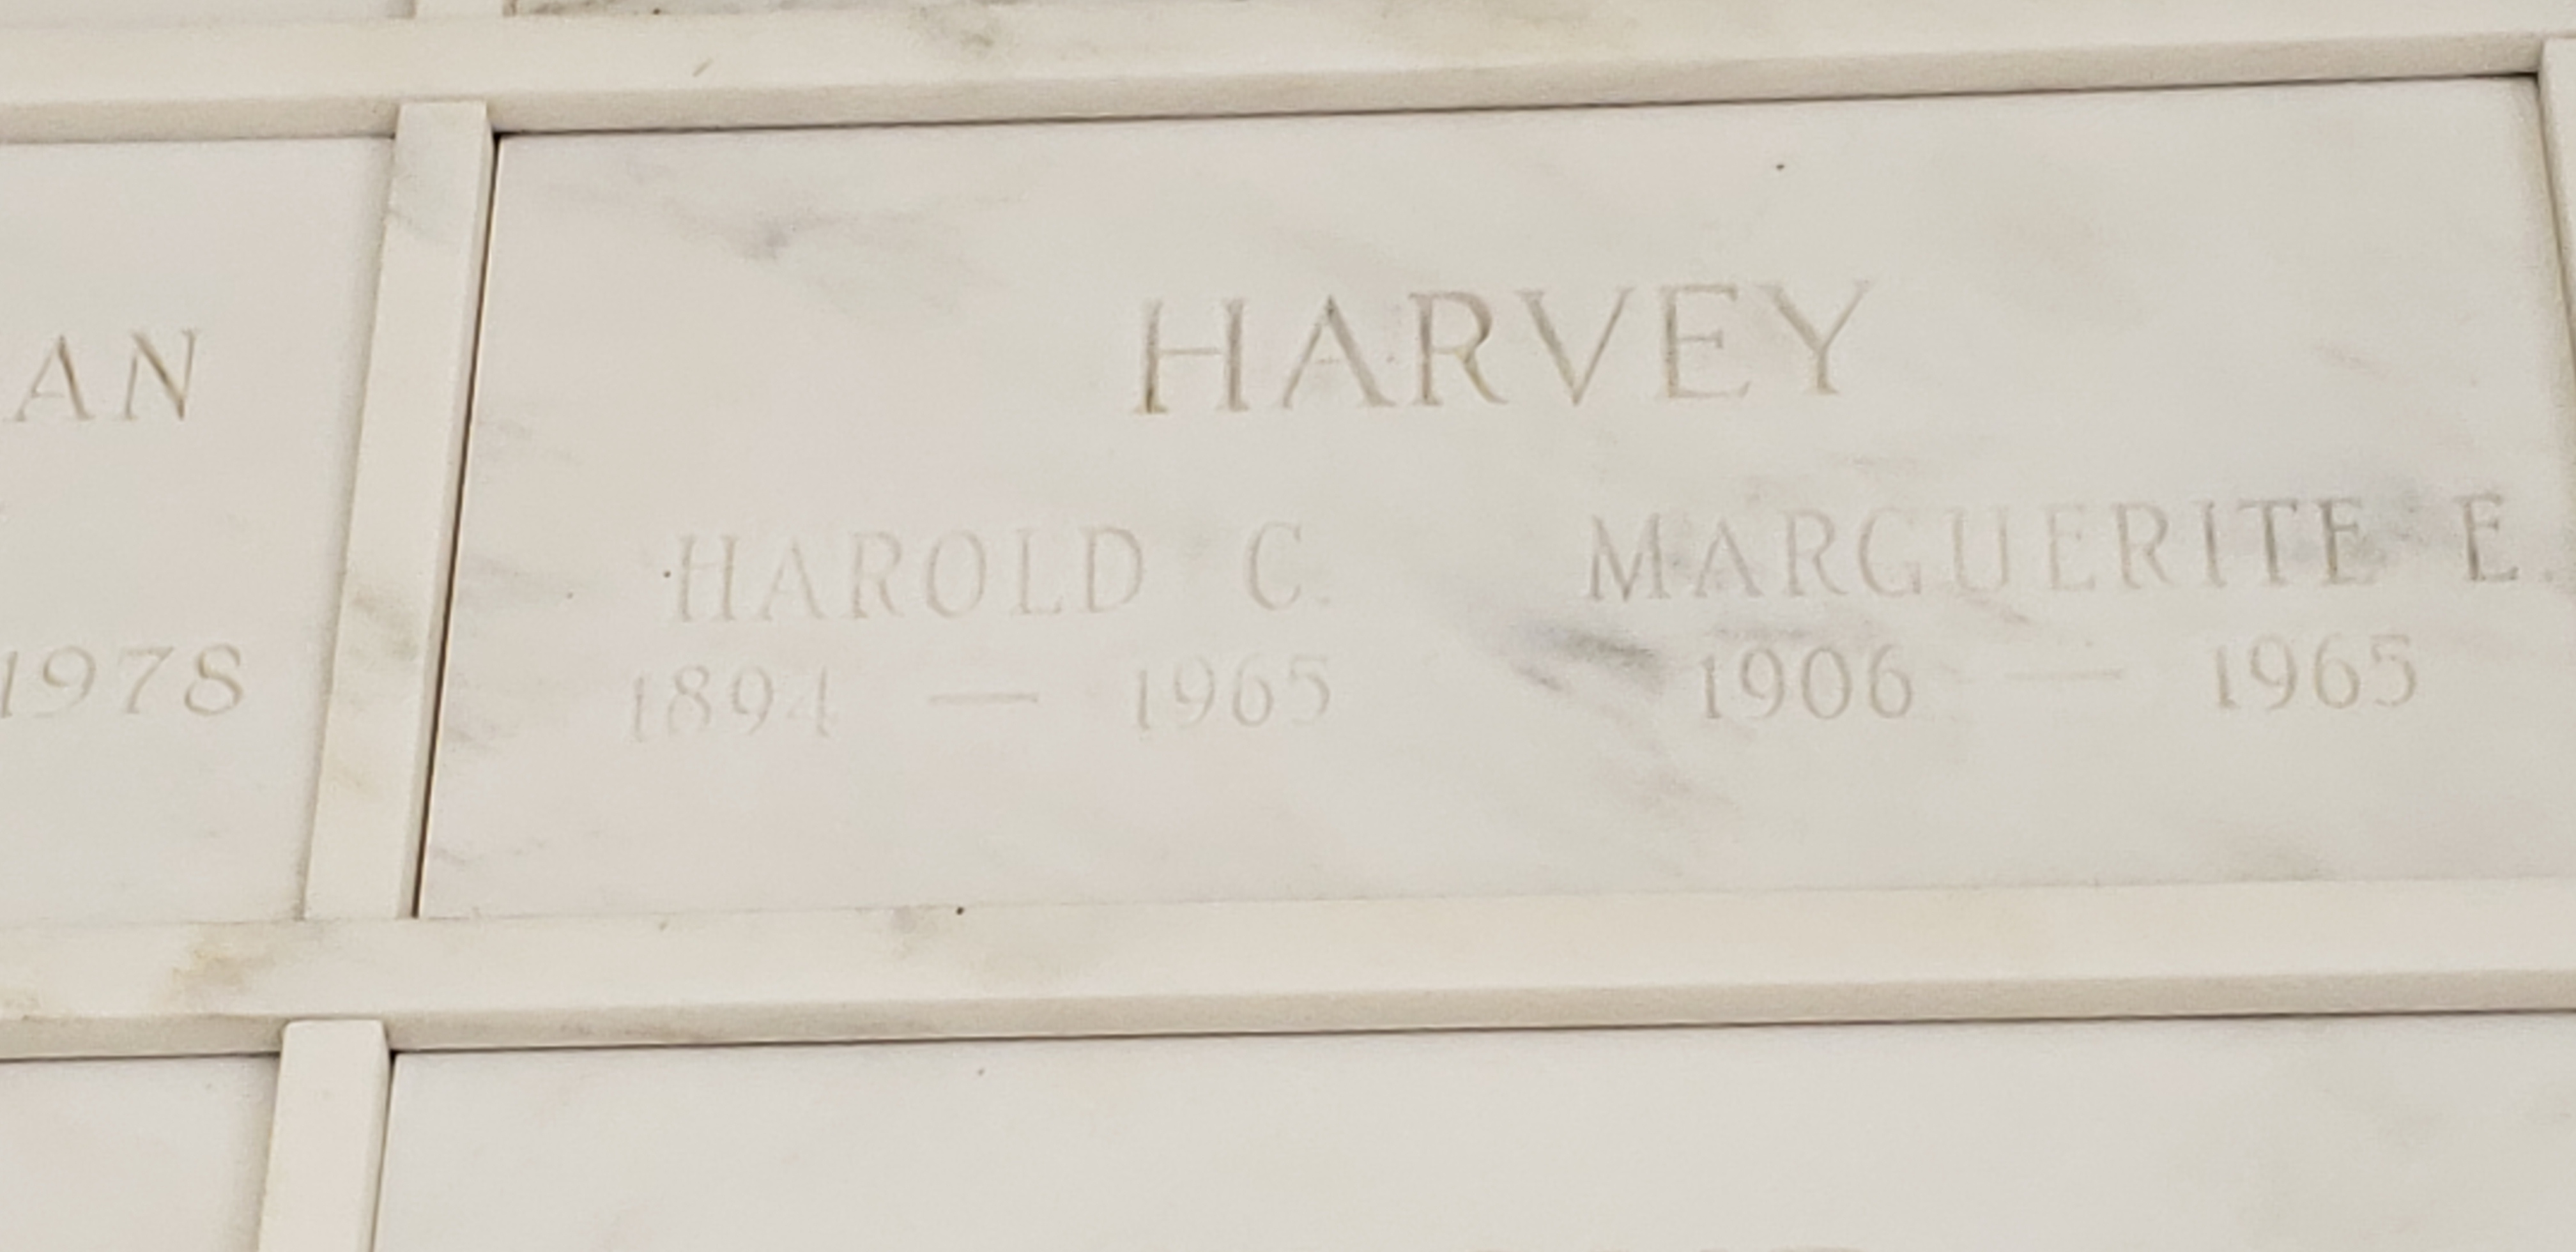 Marguerite E Harvey